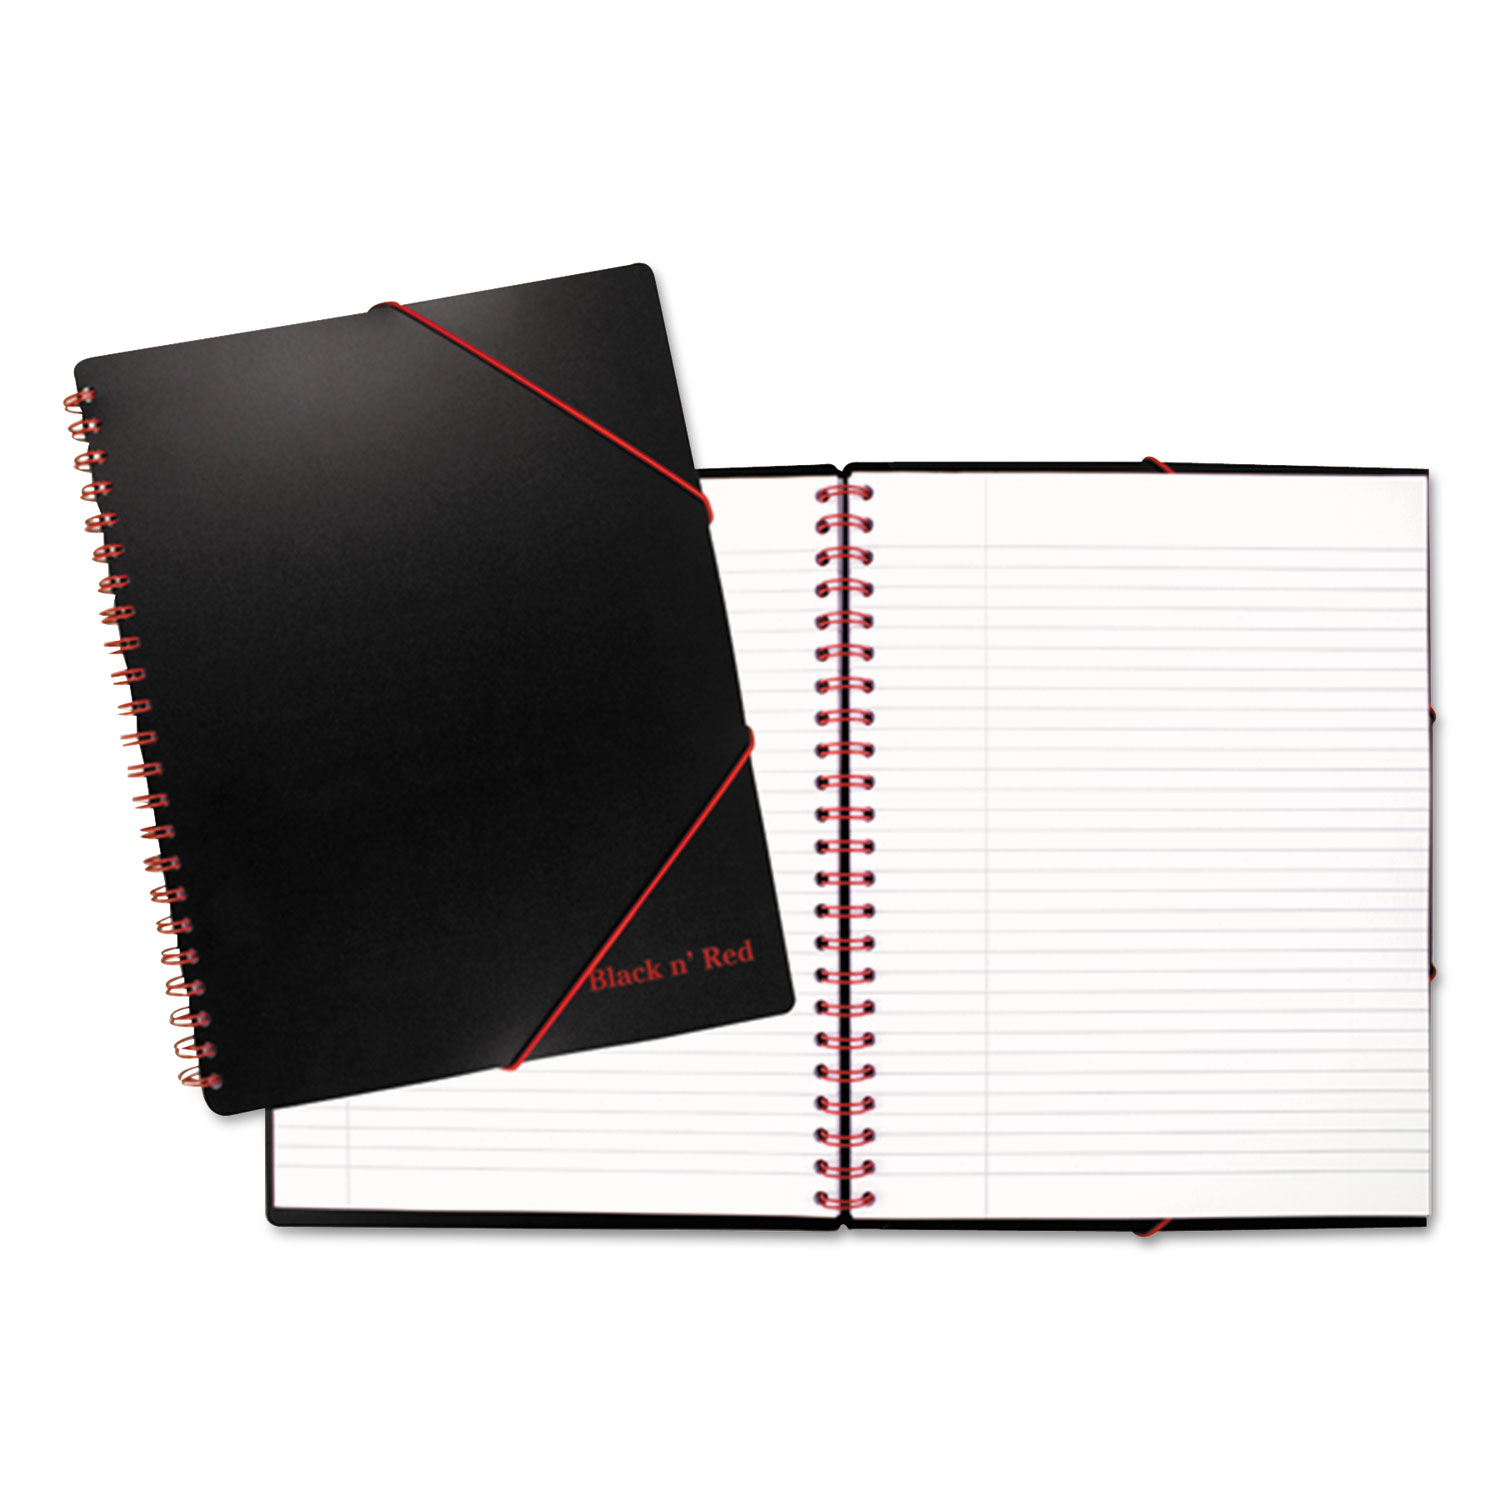  Black n' Red 400077473 Black n’ Red A4+ Filing Notebook, Wide/Legal Rule, Black, 11.68 x 8.25, 80 Sheets (JDK400077473) 